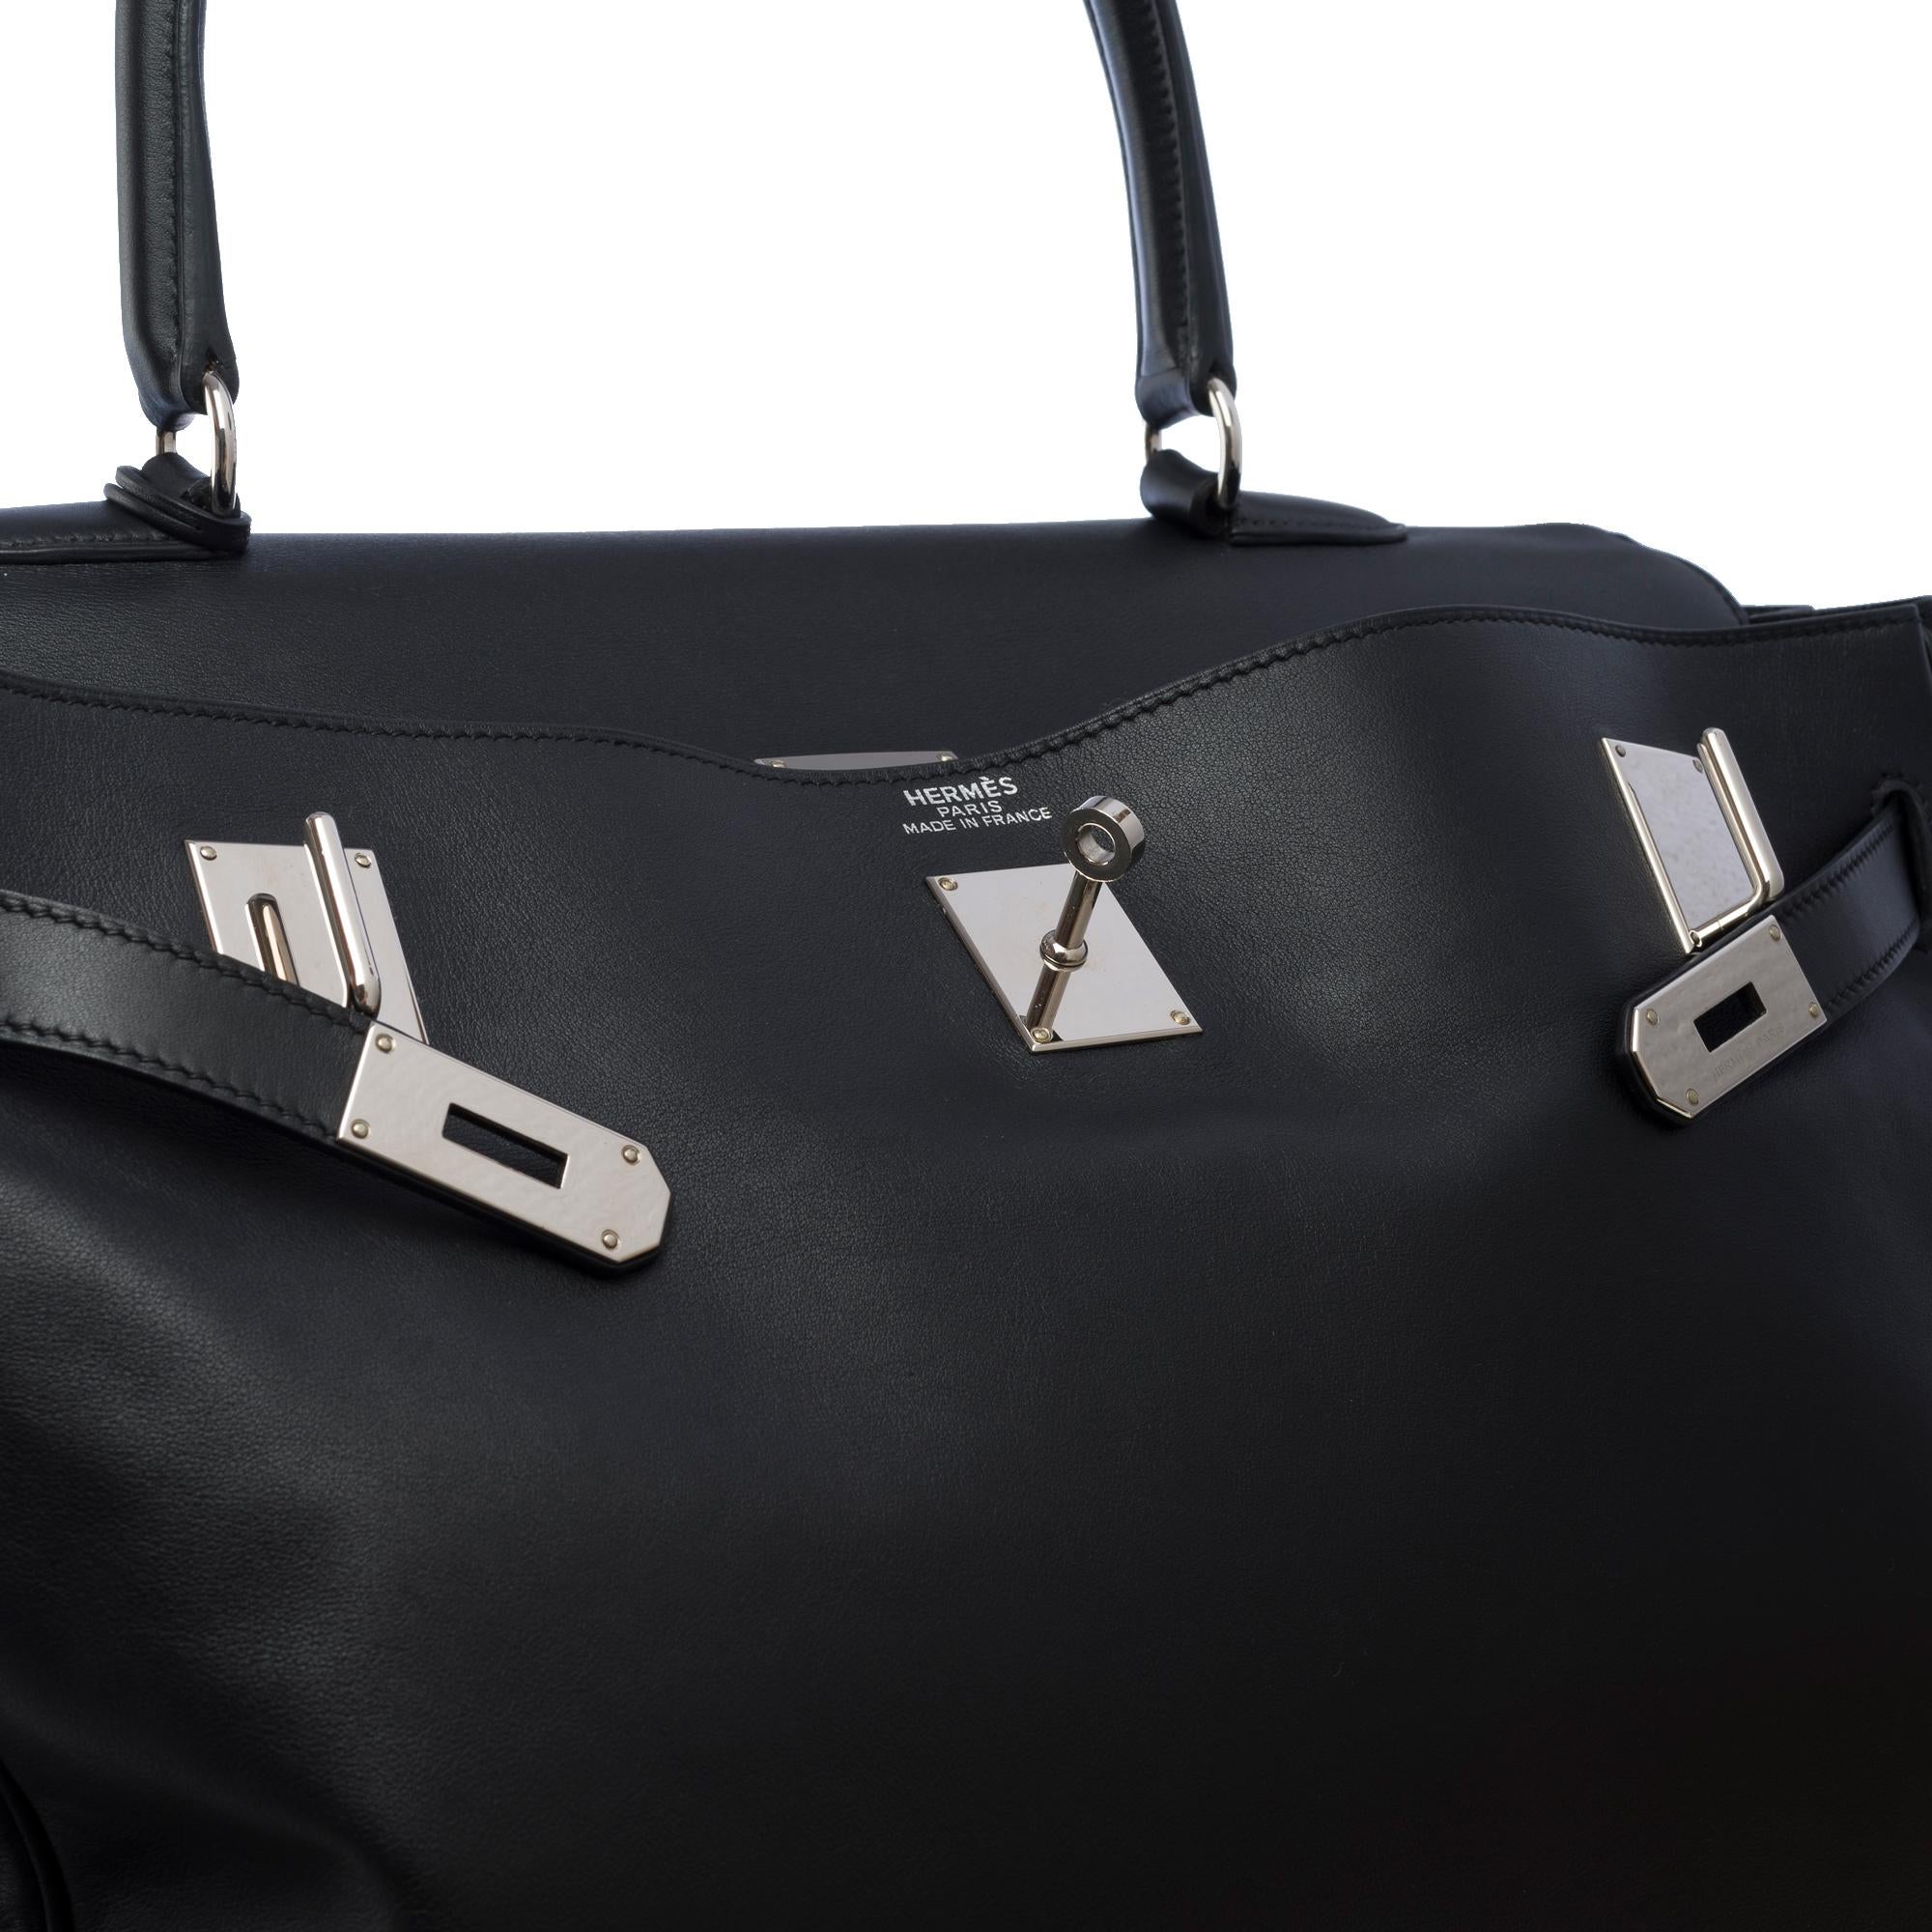 Rare Hermès Kelly Relax 50 retourne Week-end bag inBlack Swift leather, SHW 2